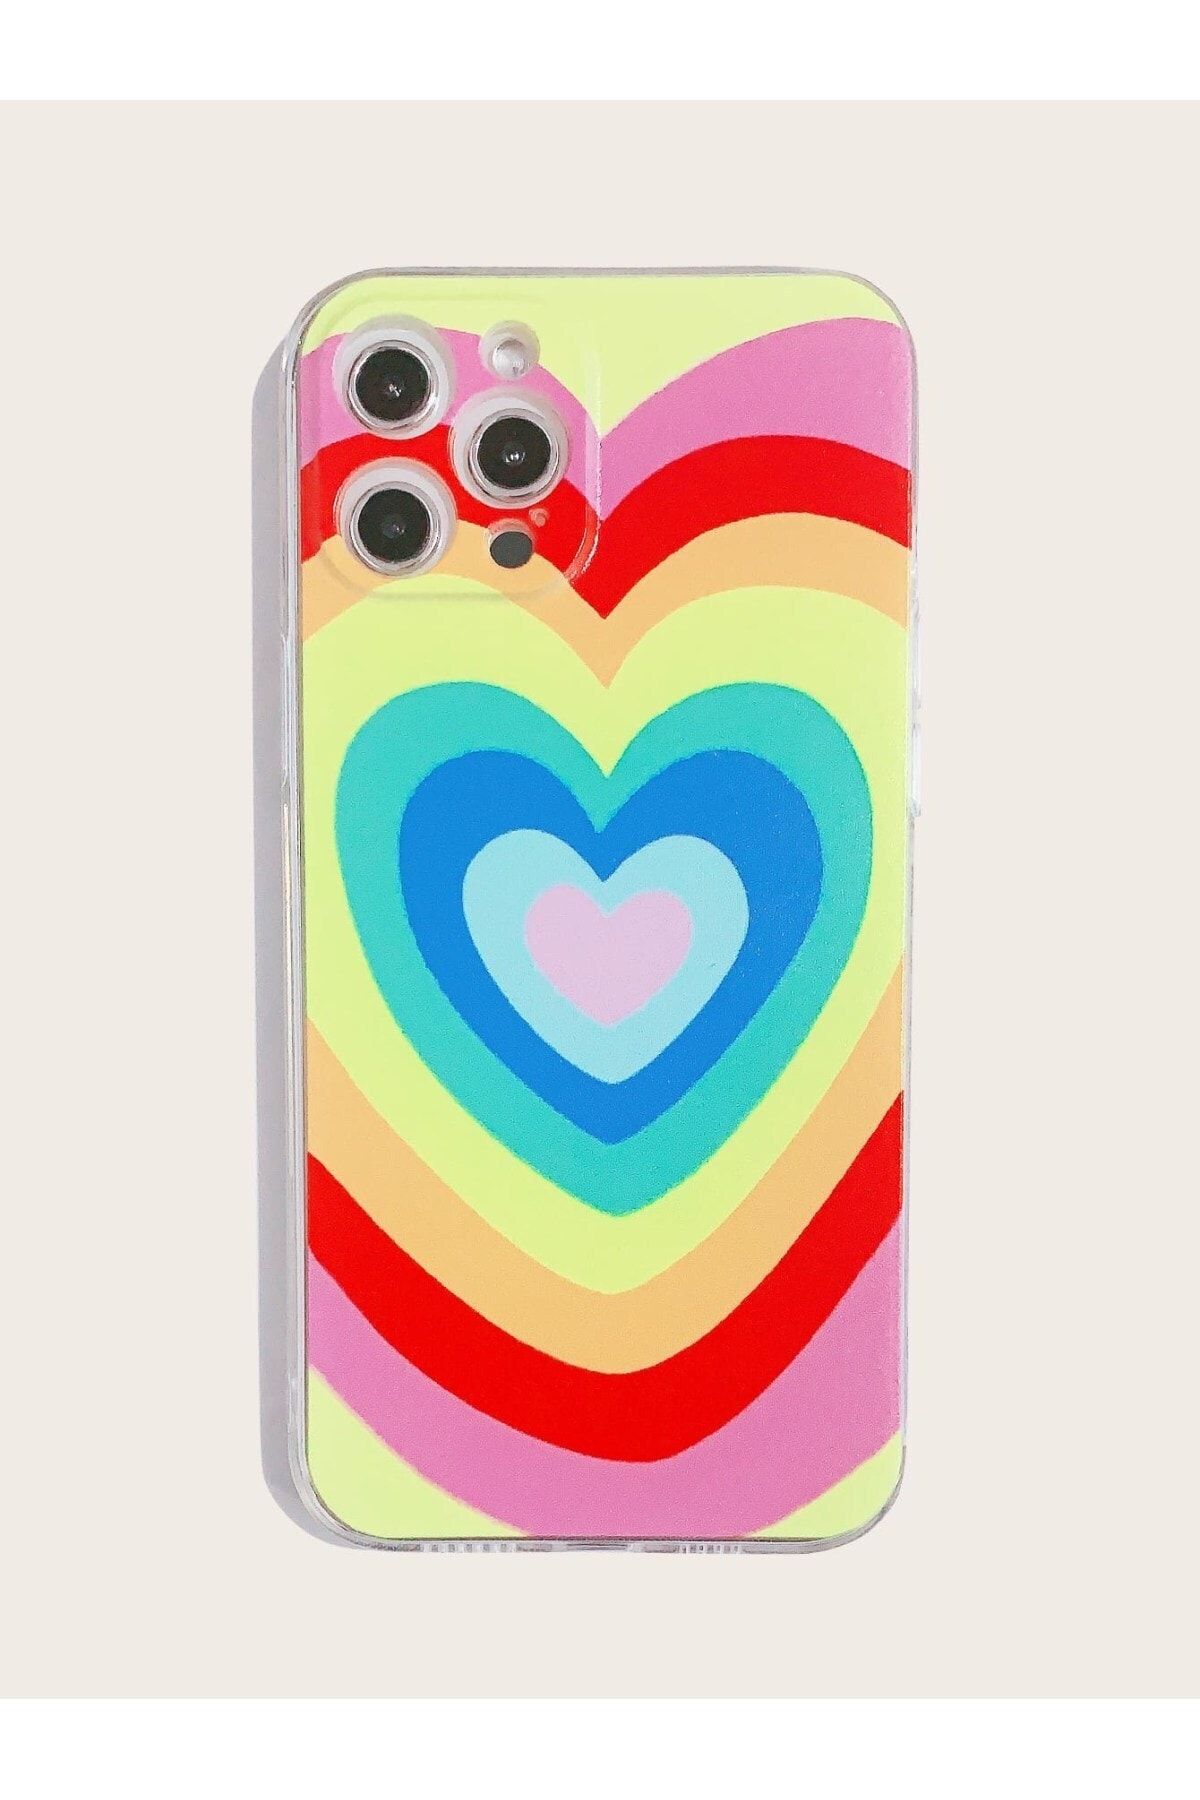 Mobildizayn Lg G5 Çok Renkli Kalp Desenli Şeffaf Kılıf